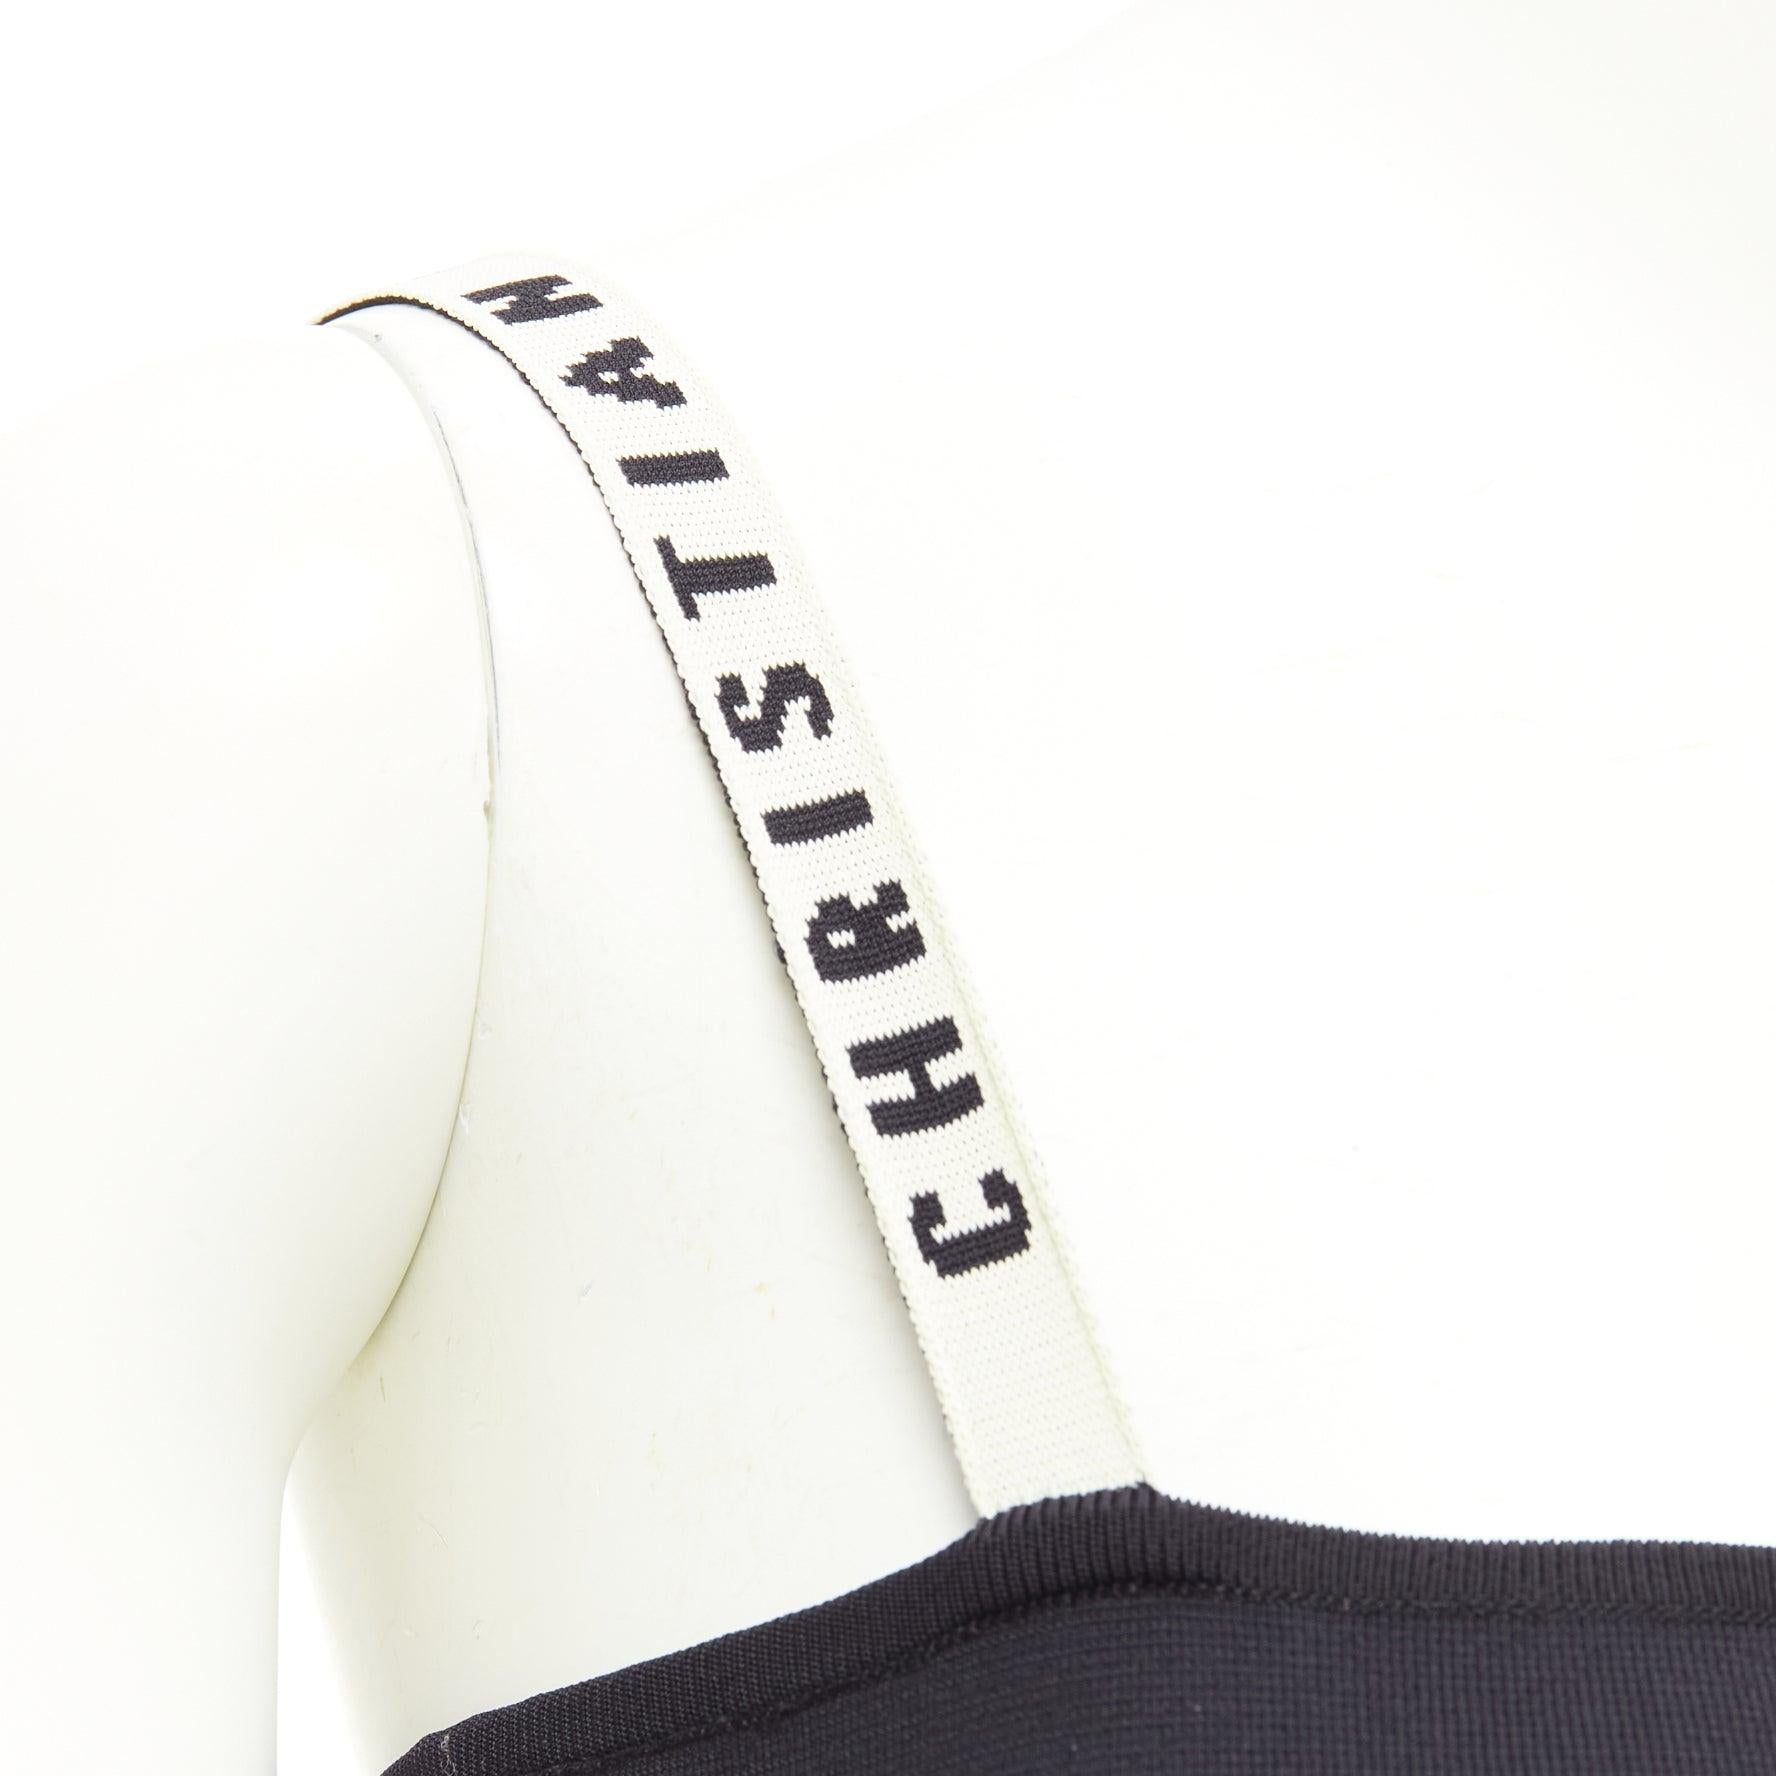 DIOR J'adior black white logo strap stretch jersey bralette crop top S
Reference: AAWC/A00833
Brand: Dior
Designer: Maria Grazia Chiuri
Material: Viscose, Blend
Color: Black, White
Pattern: Solid
Closure: Slip On
Extra Details: J'adior and